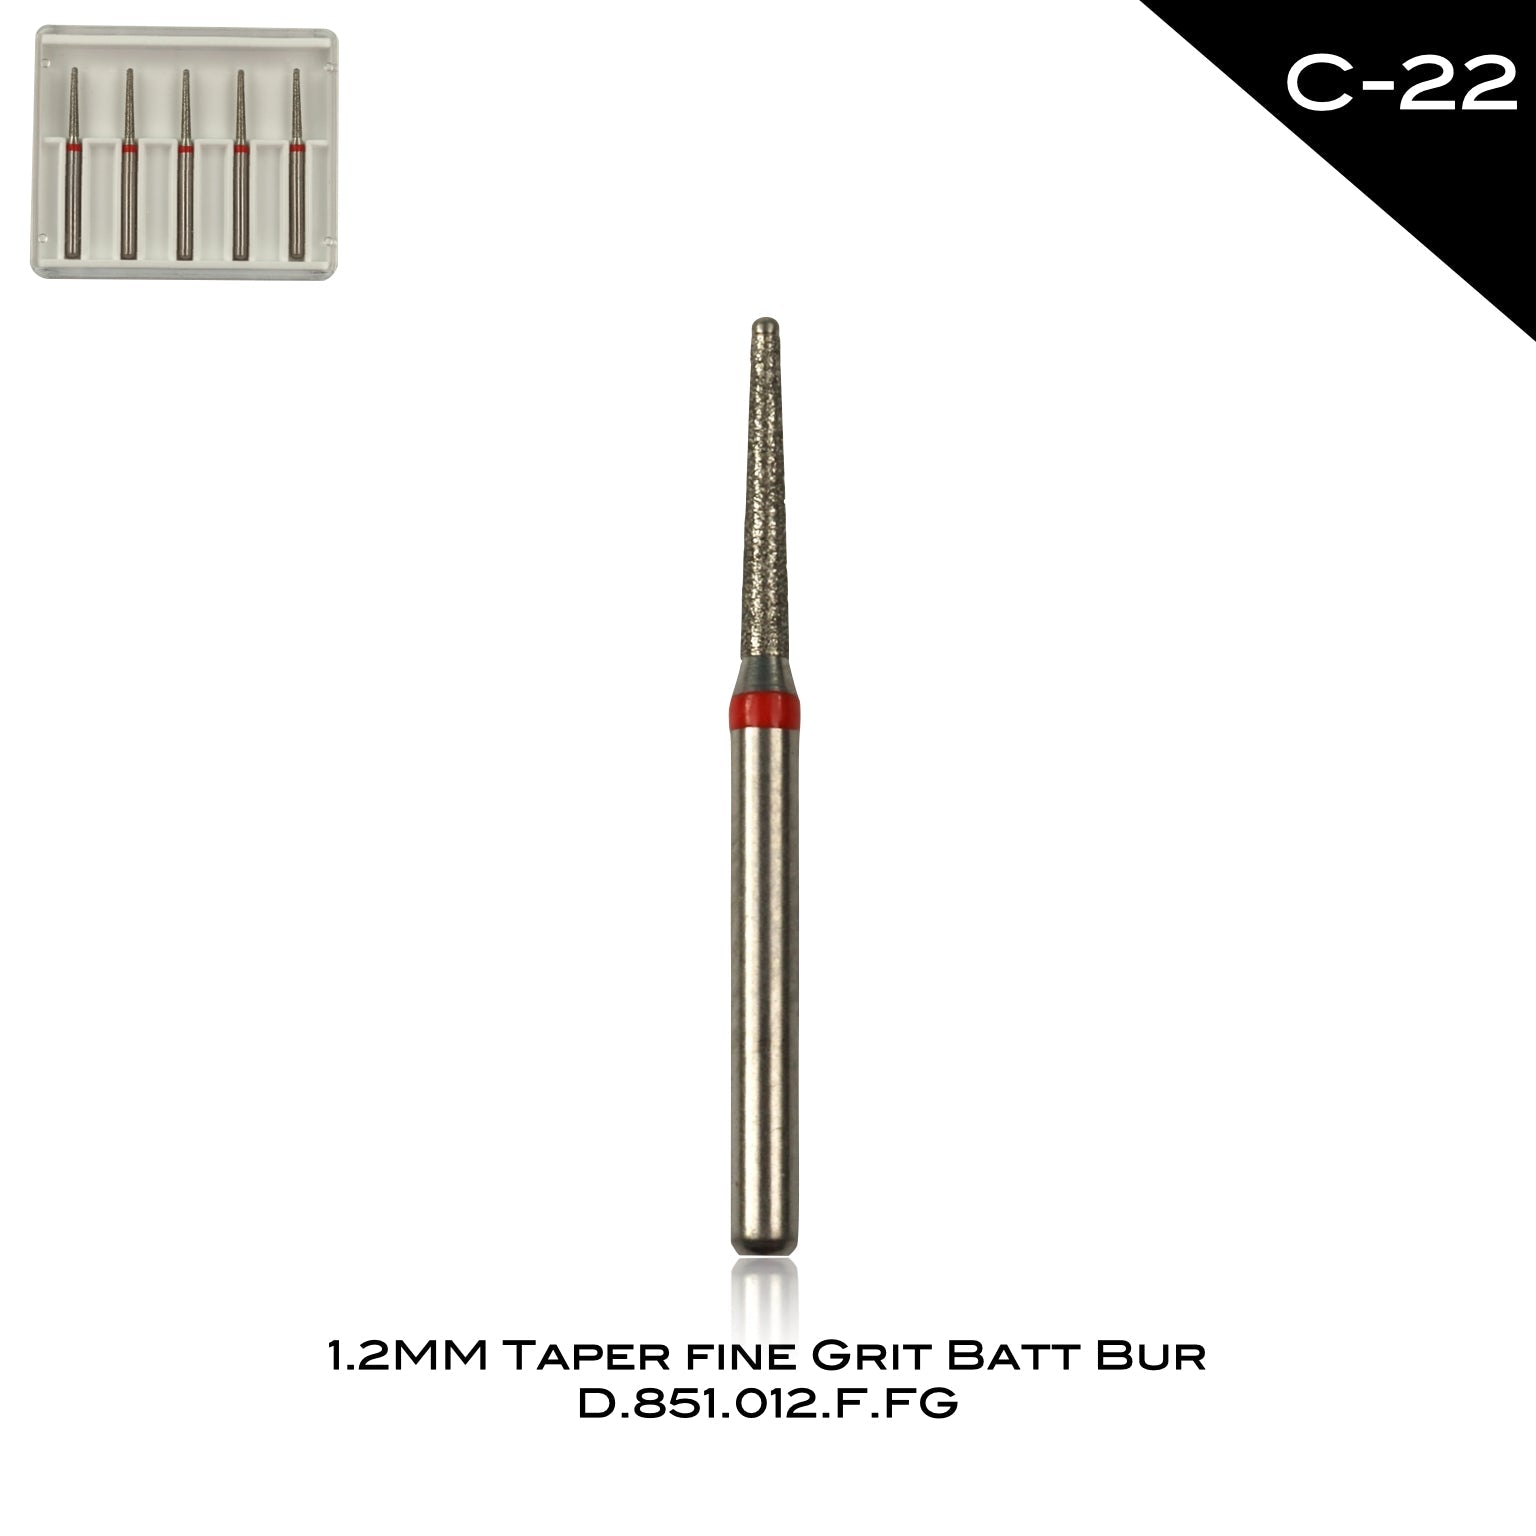 1.2mm Taper Fine Grit Batt Bur C-22 - Incidental